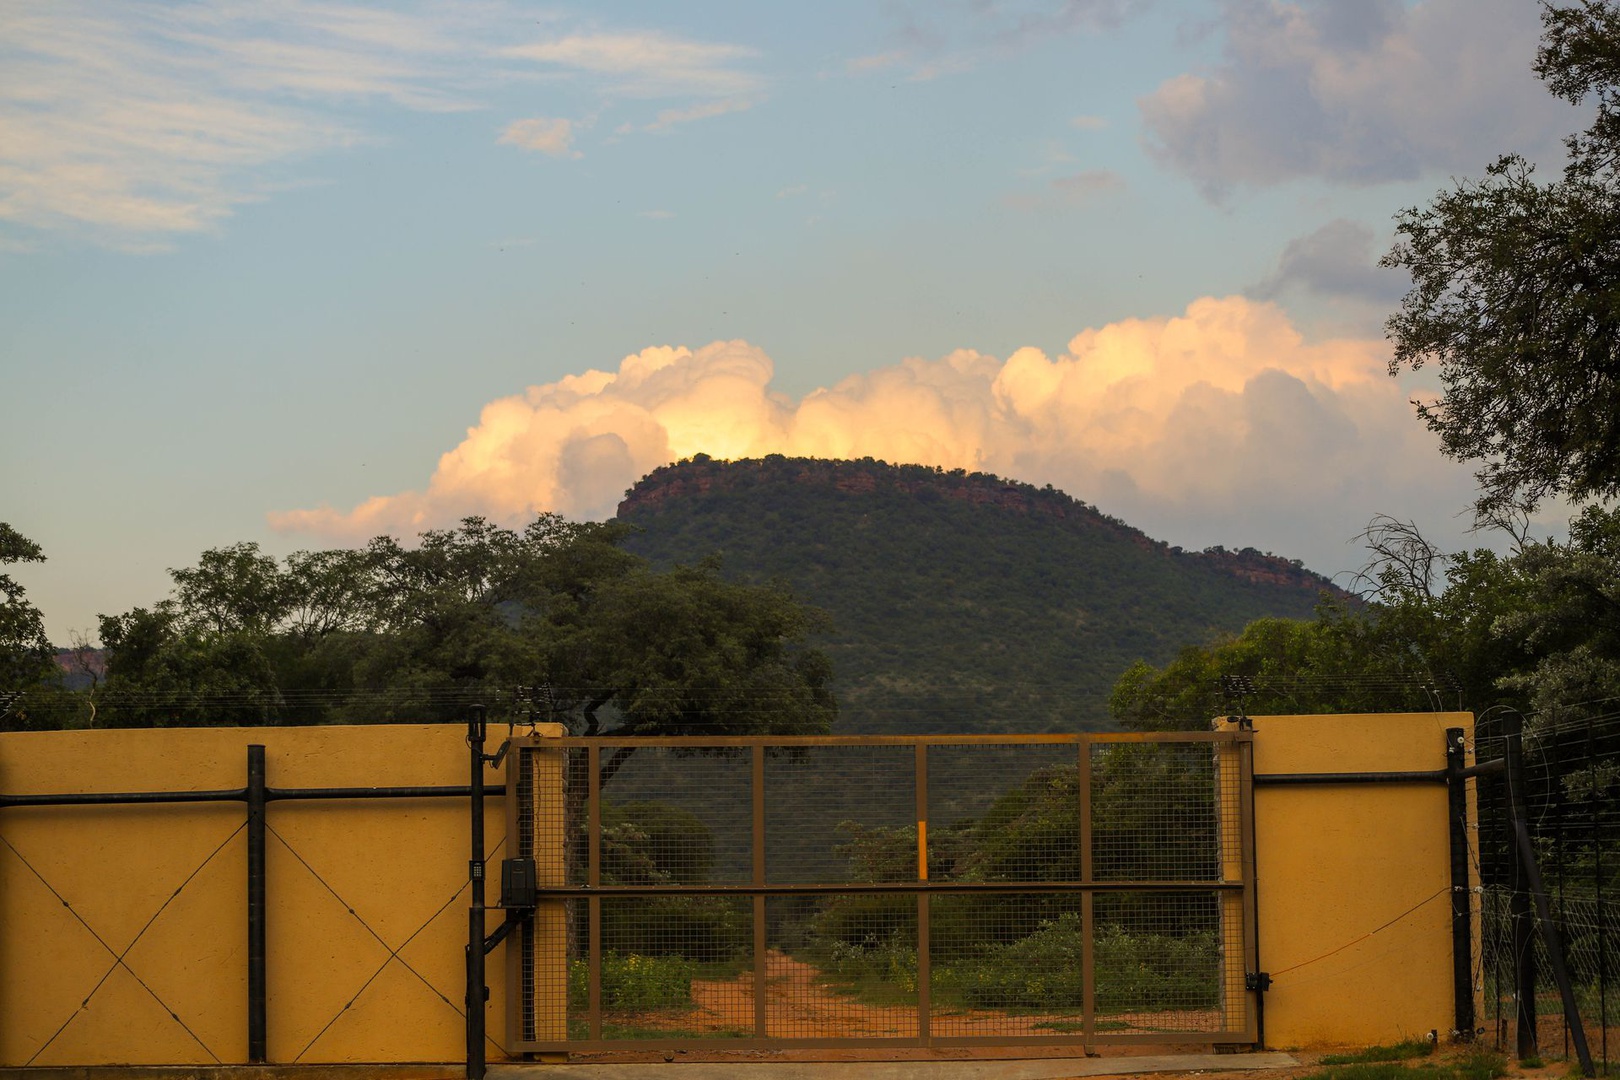 Land in Thabazimbi Rural - Farm gates